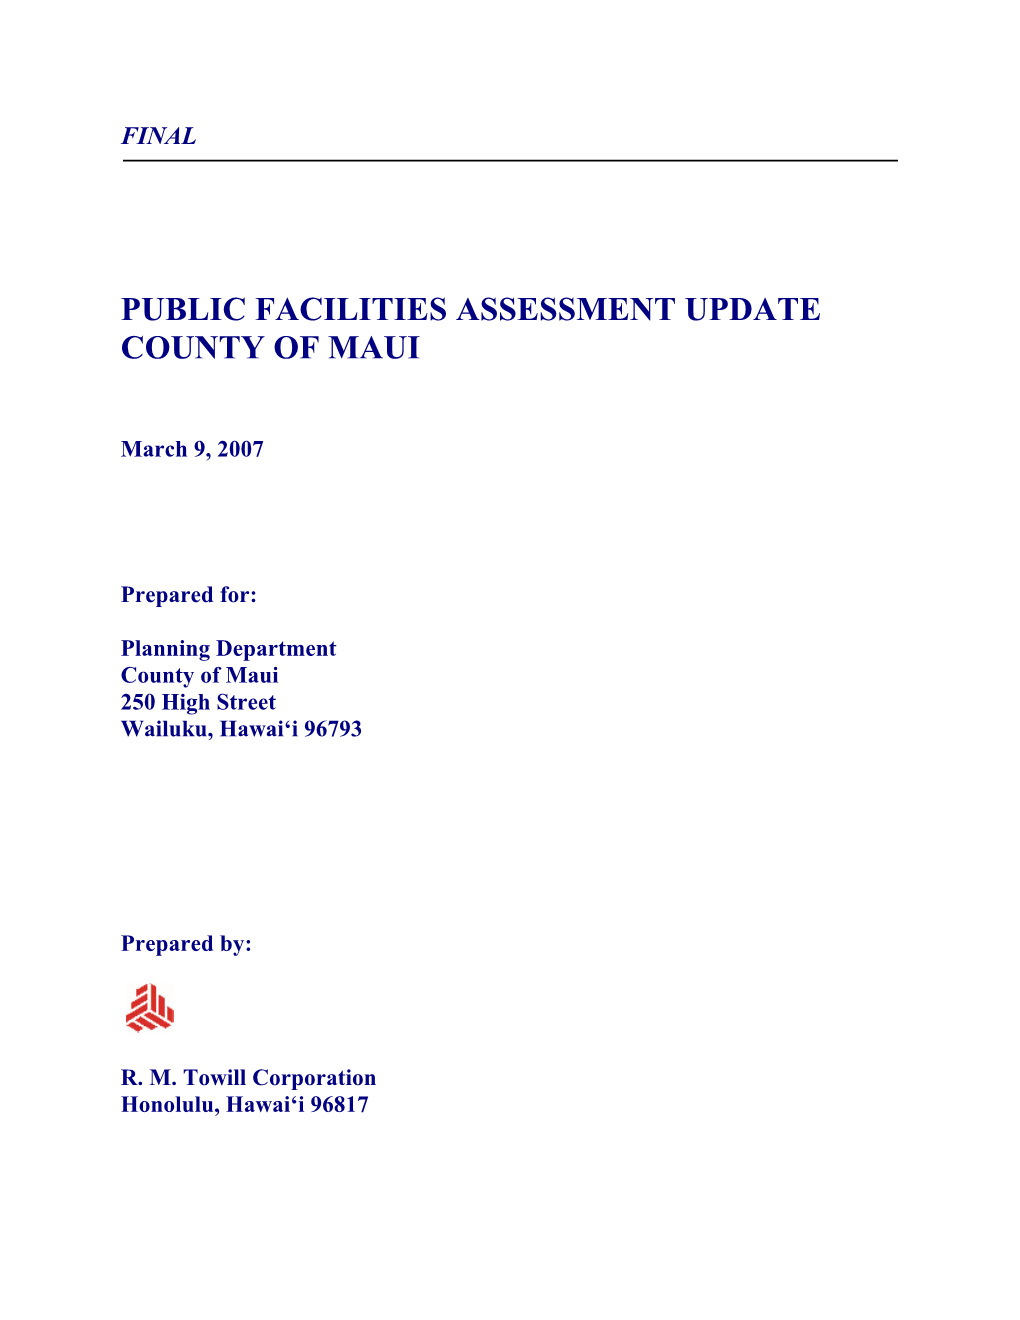 Public Facilities Assessment Update, March 2007